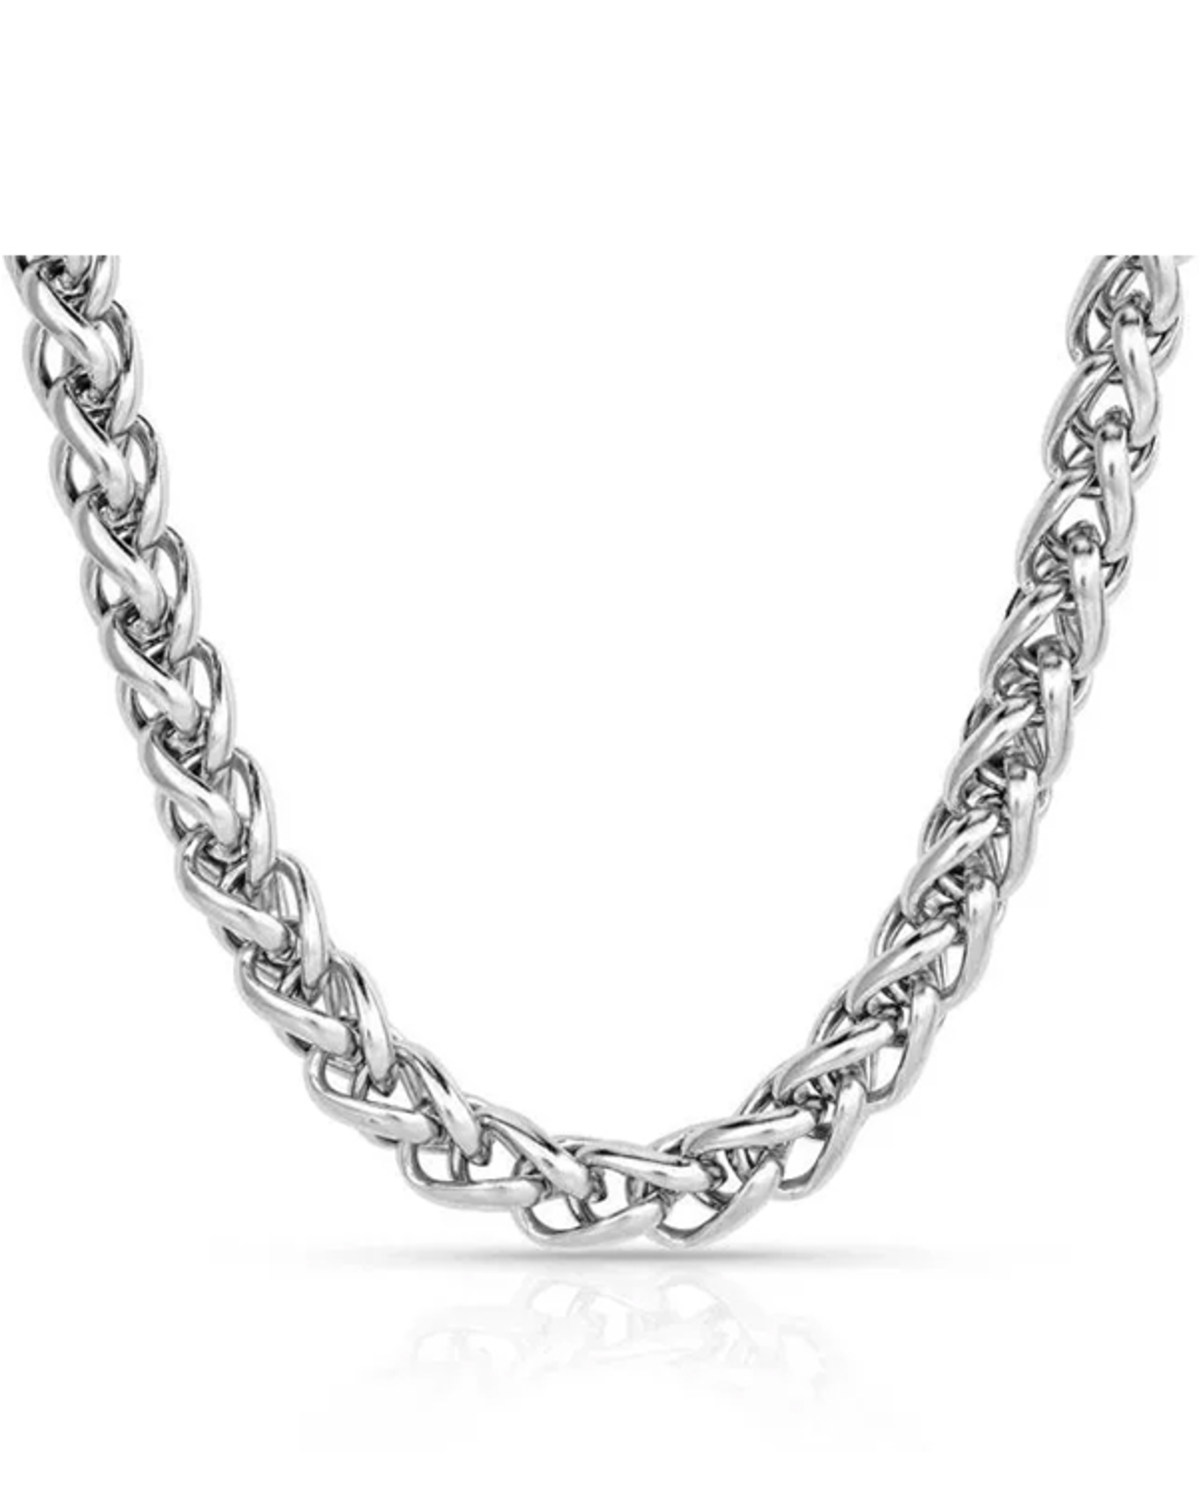 Montana Silversmiths Men's Wheat Chain Necklace